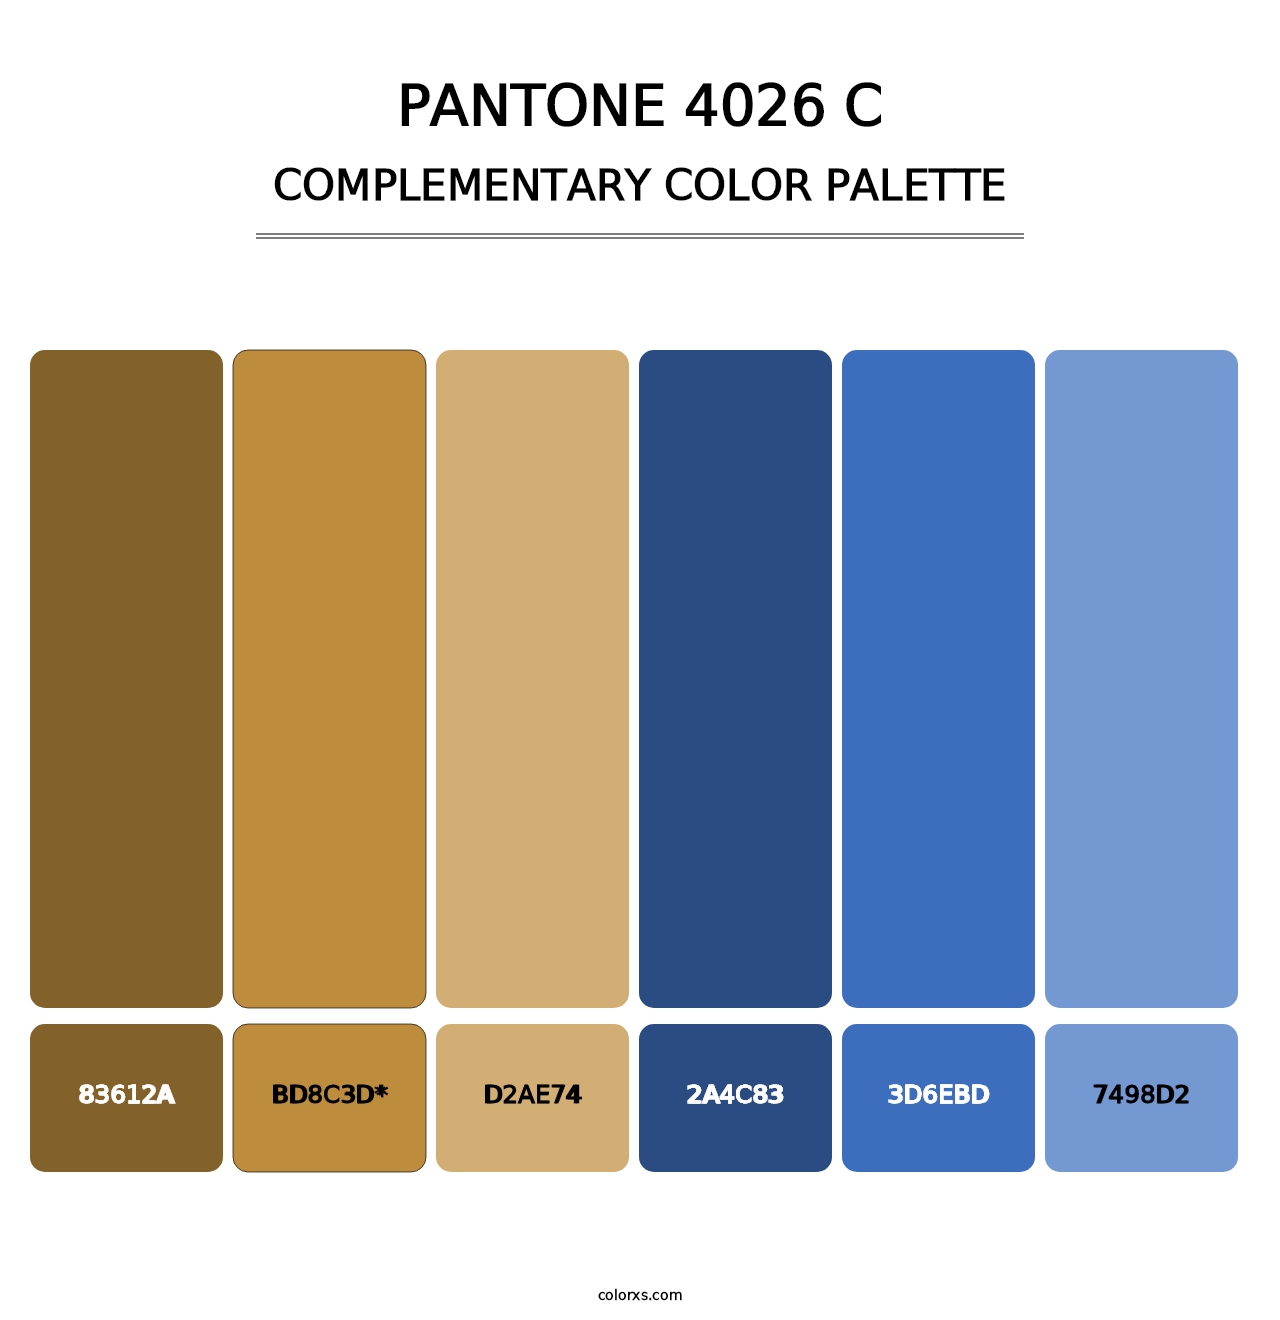 PANTONE 4026 C - Complementary Color Palette